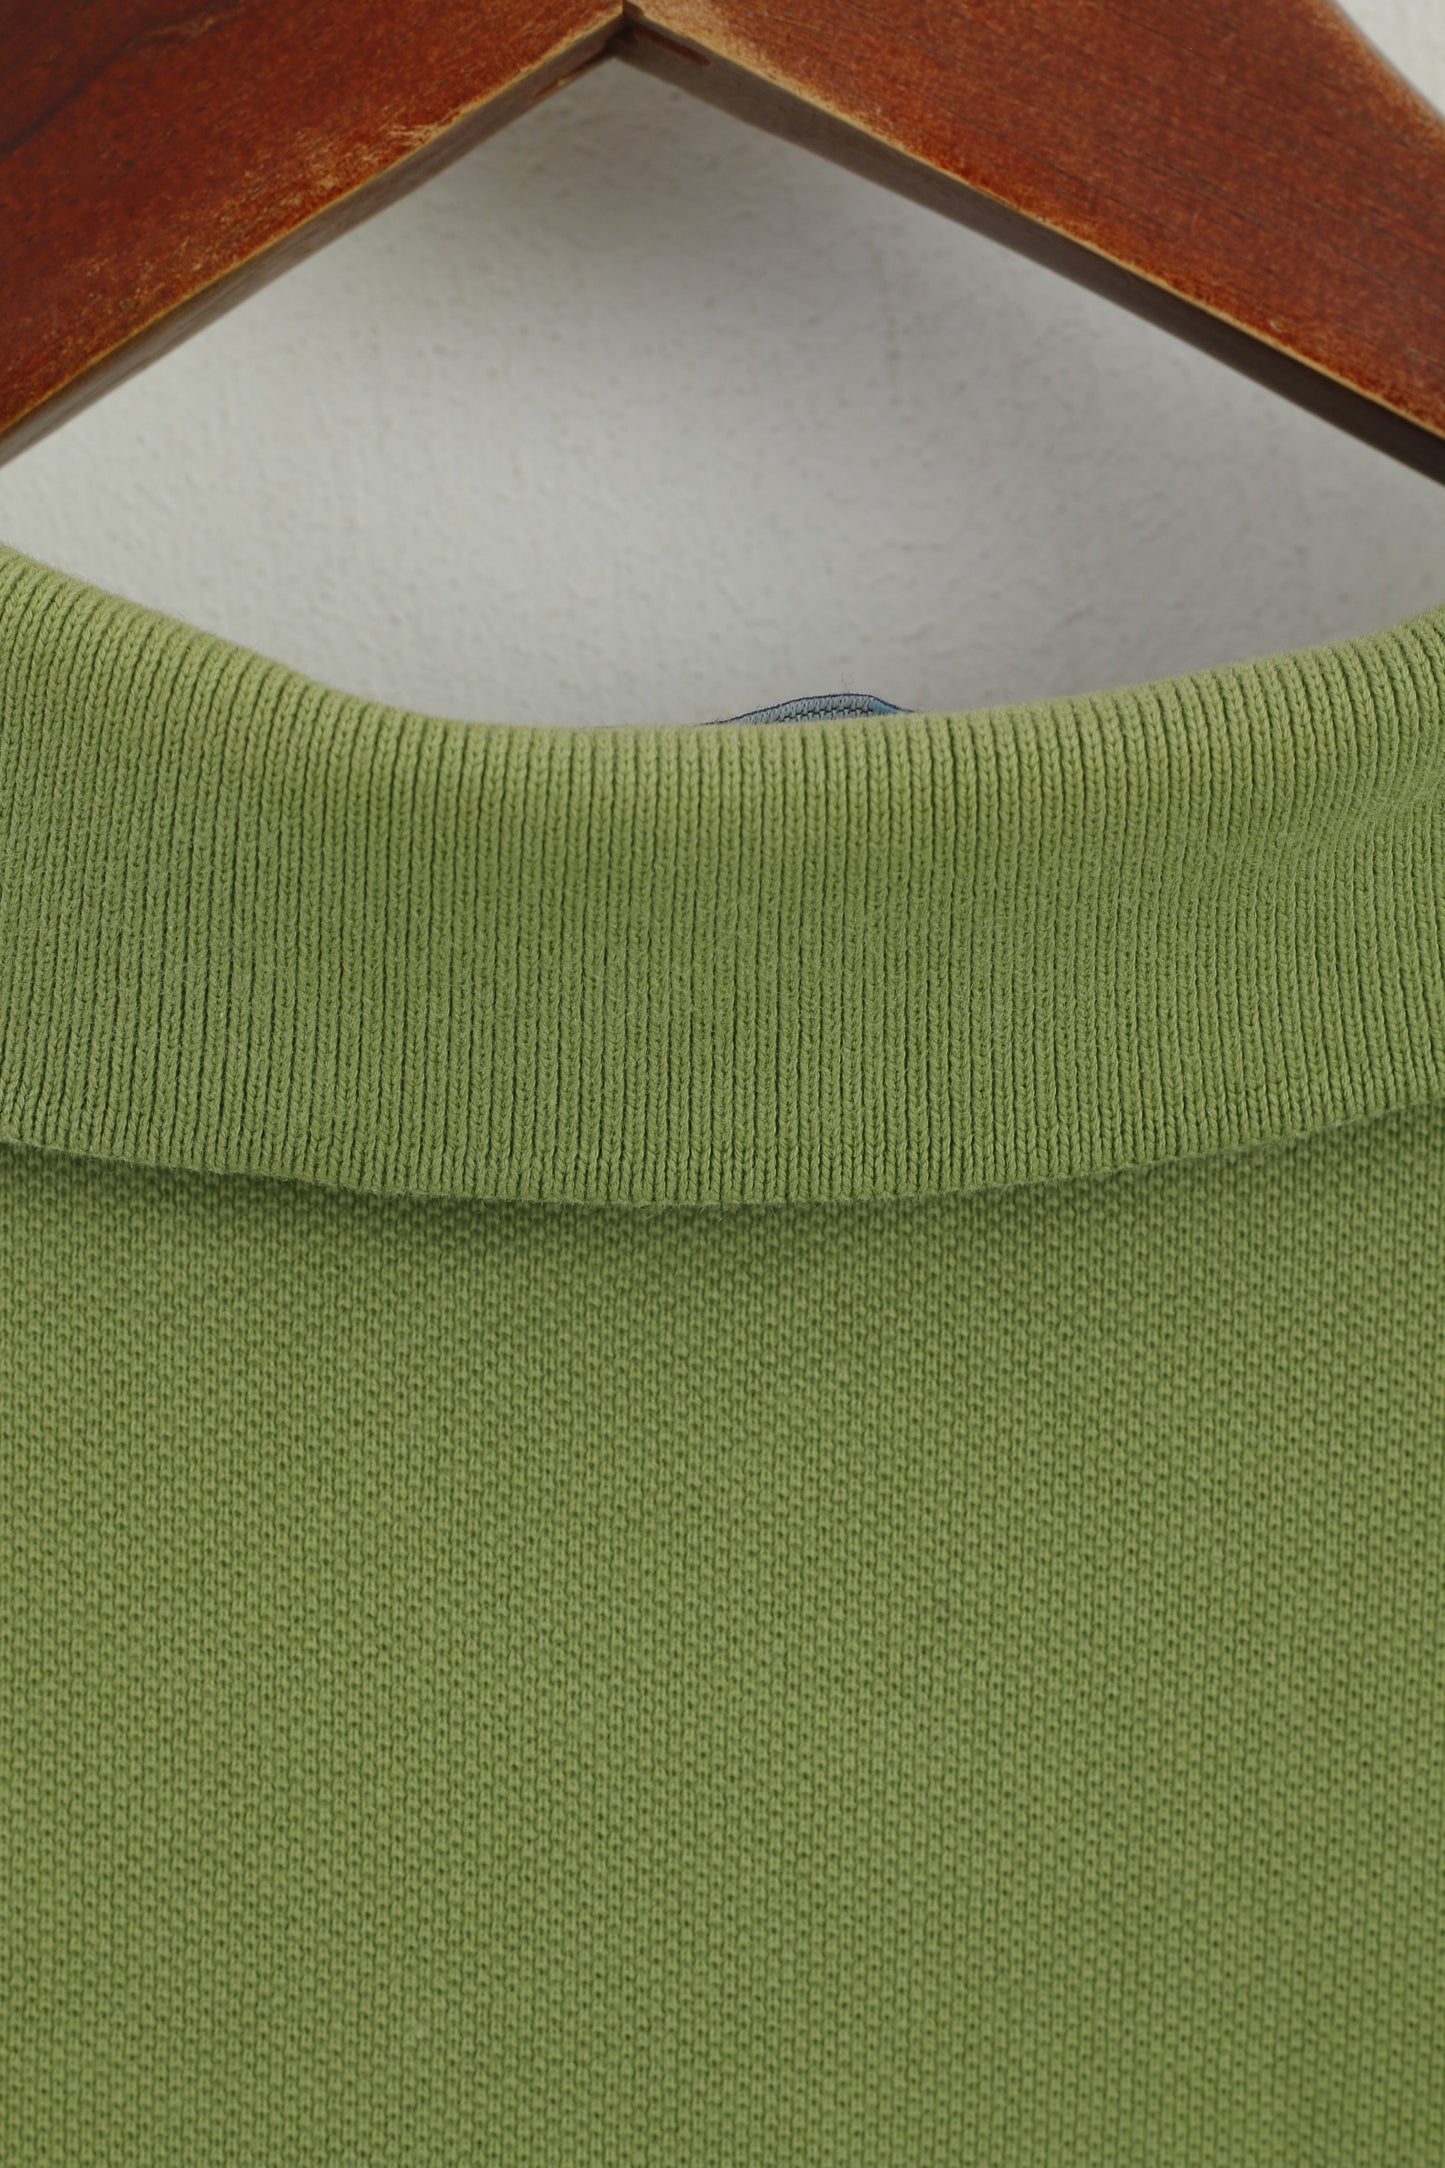 Fred Perry Men XS Polo Shirt Green Cotton Pique Short Sleeve Plain Top